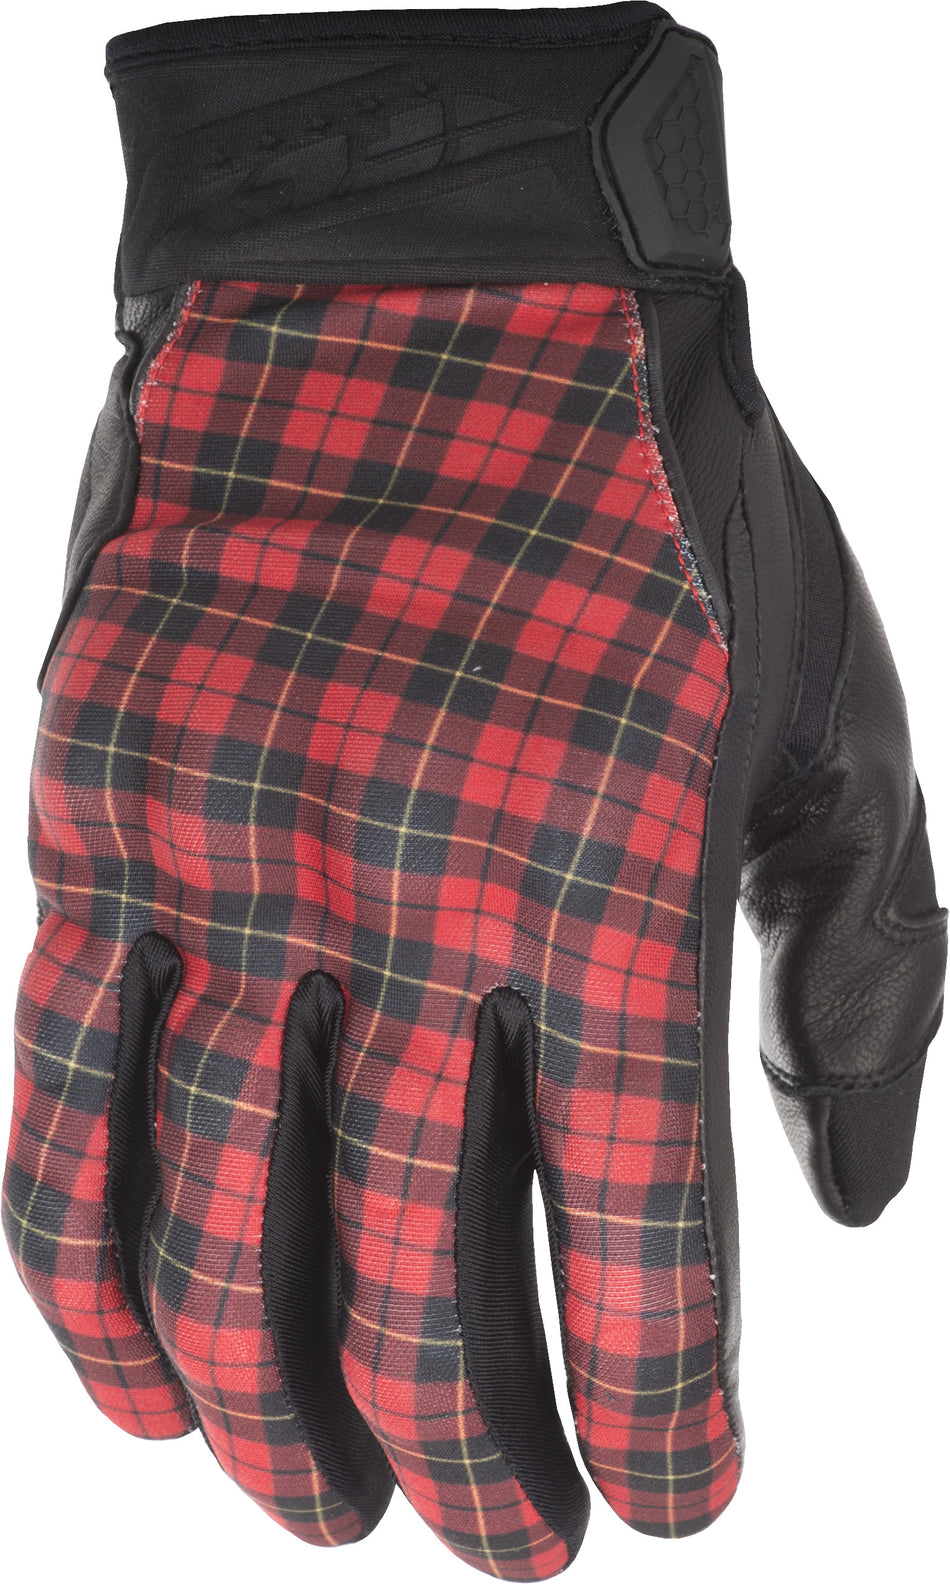 FLY RACING Subvert Highland Gloves Lg #5884 476-2072~4